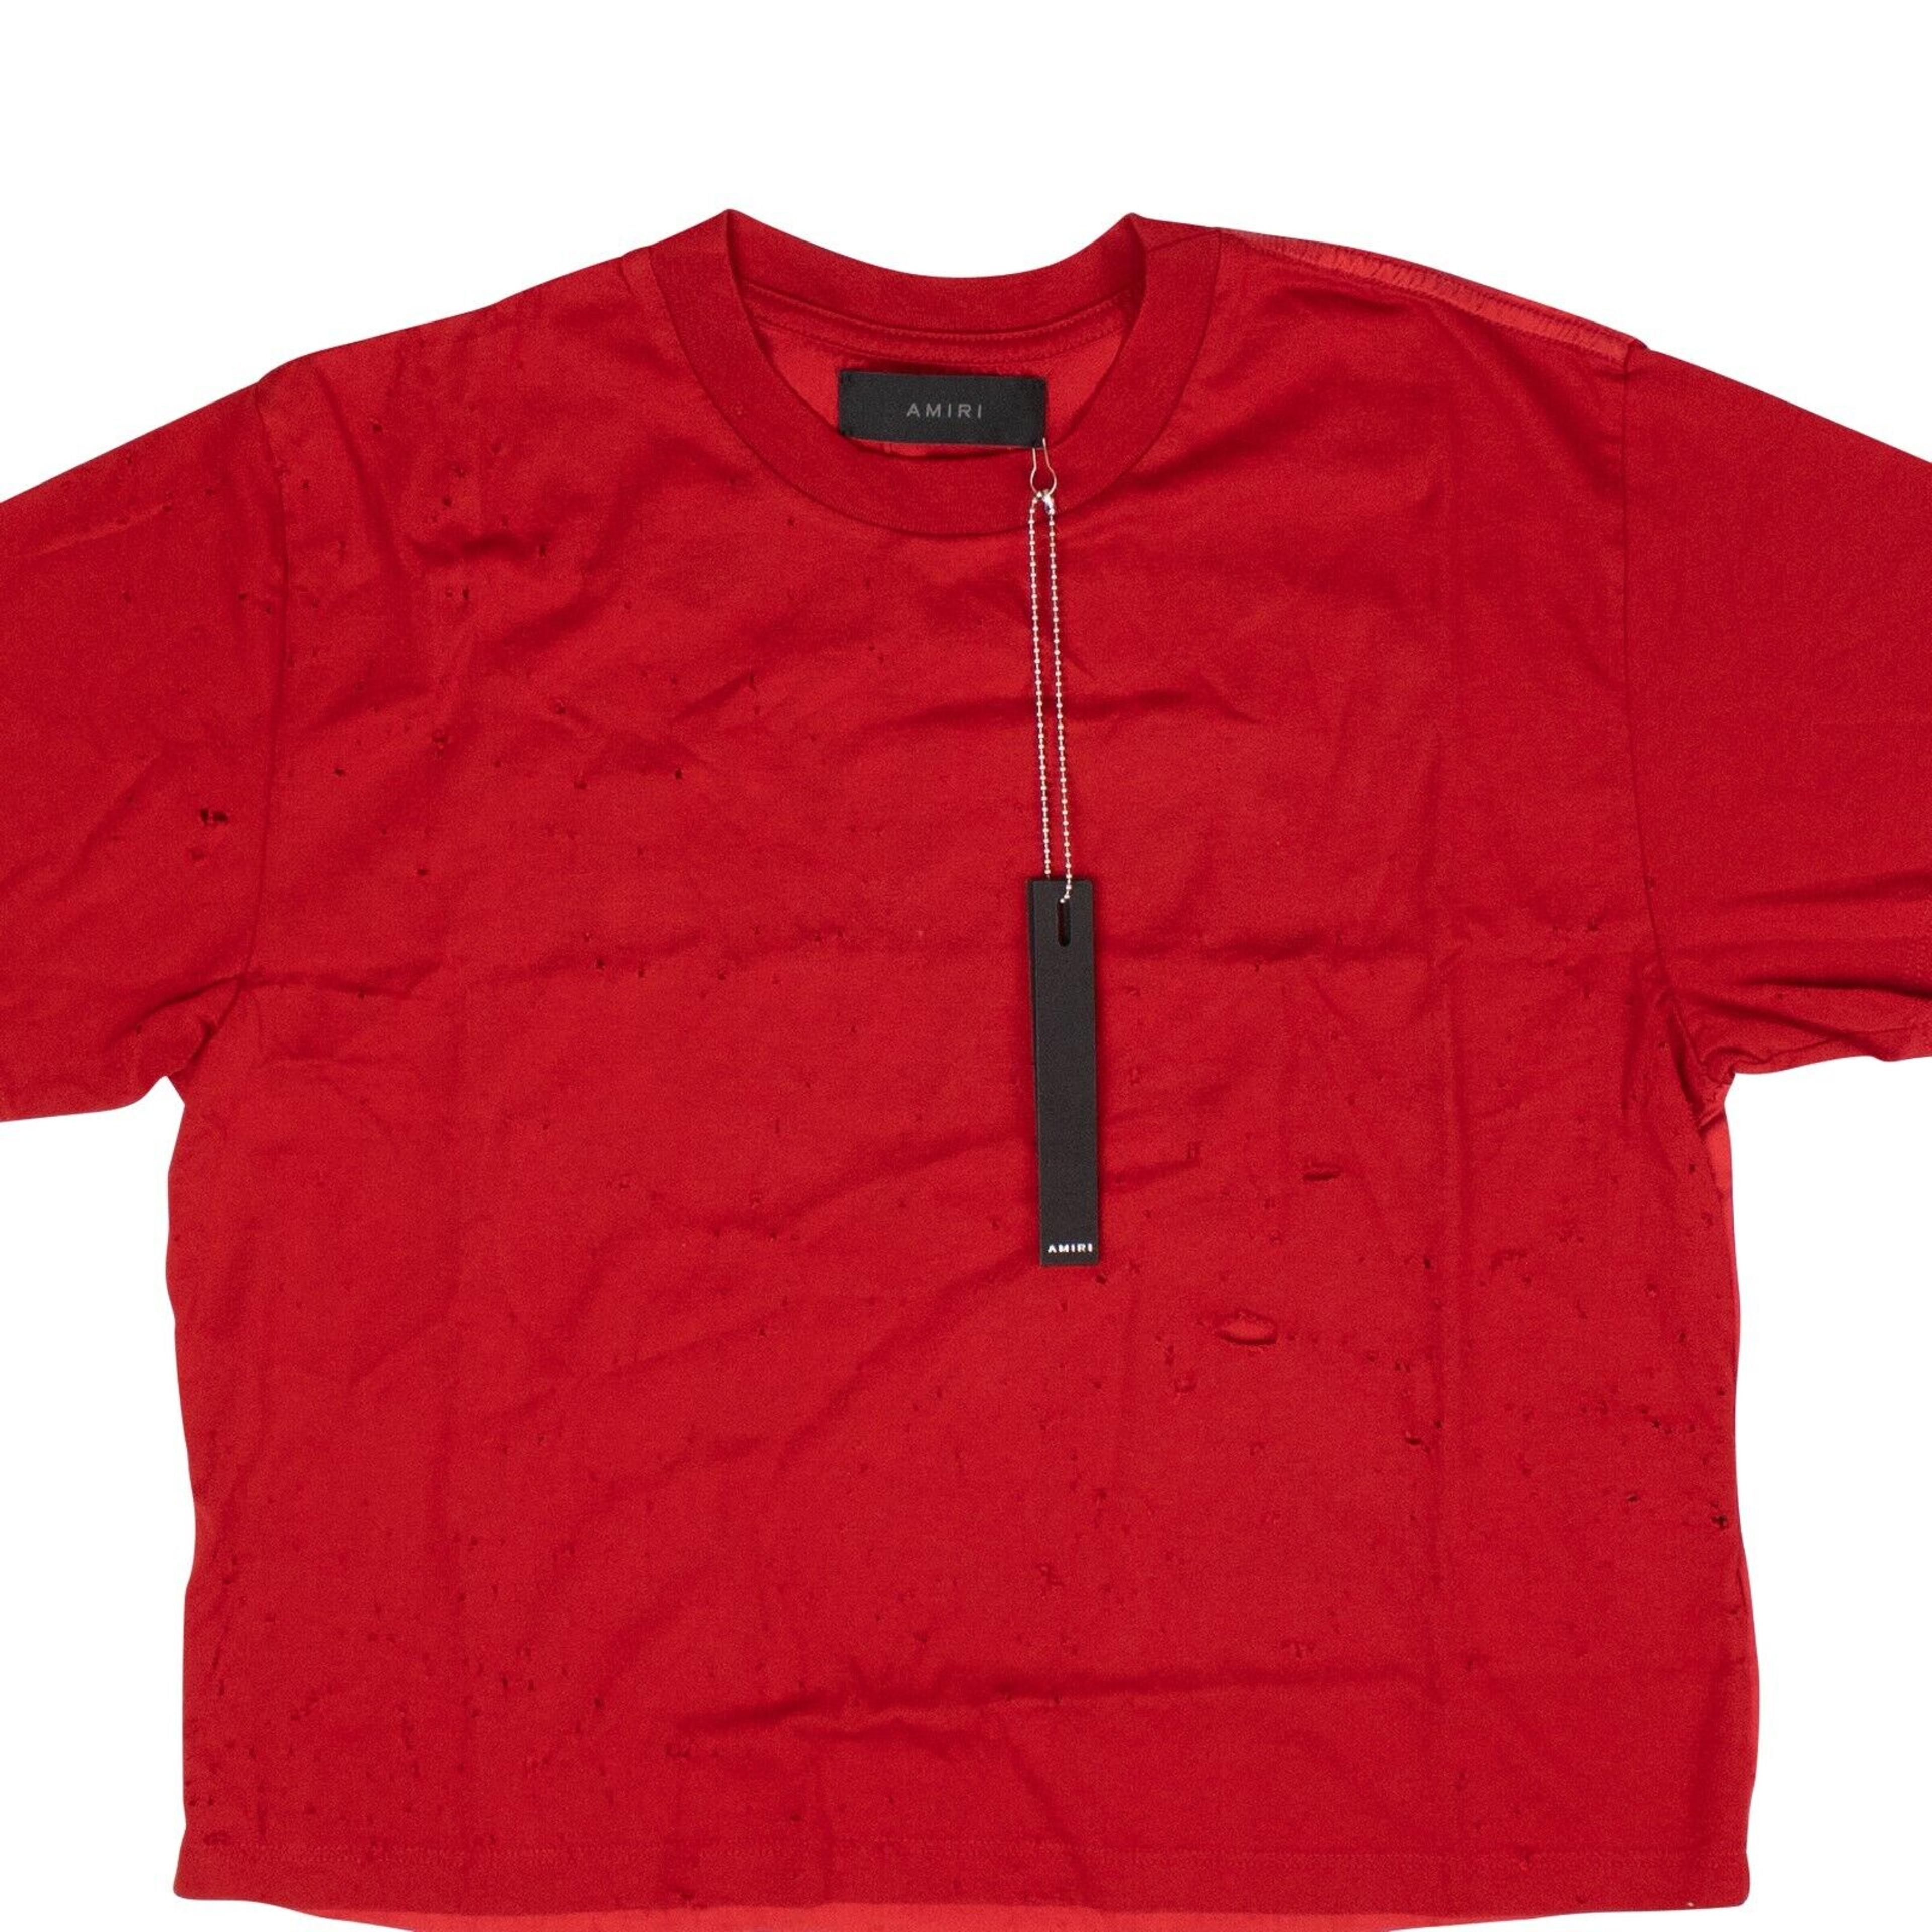 Alternate View 1 of Red Slash Cotton T-Shirt